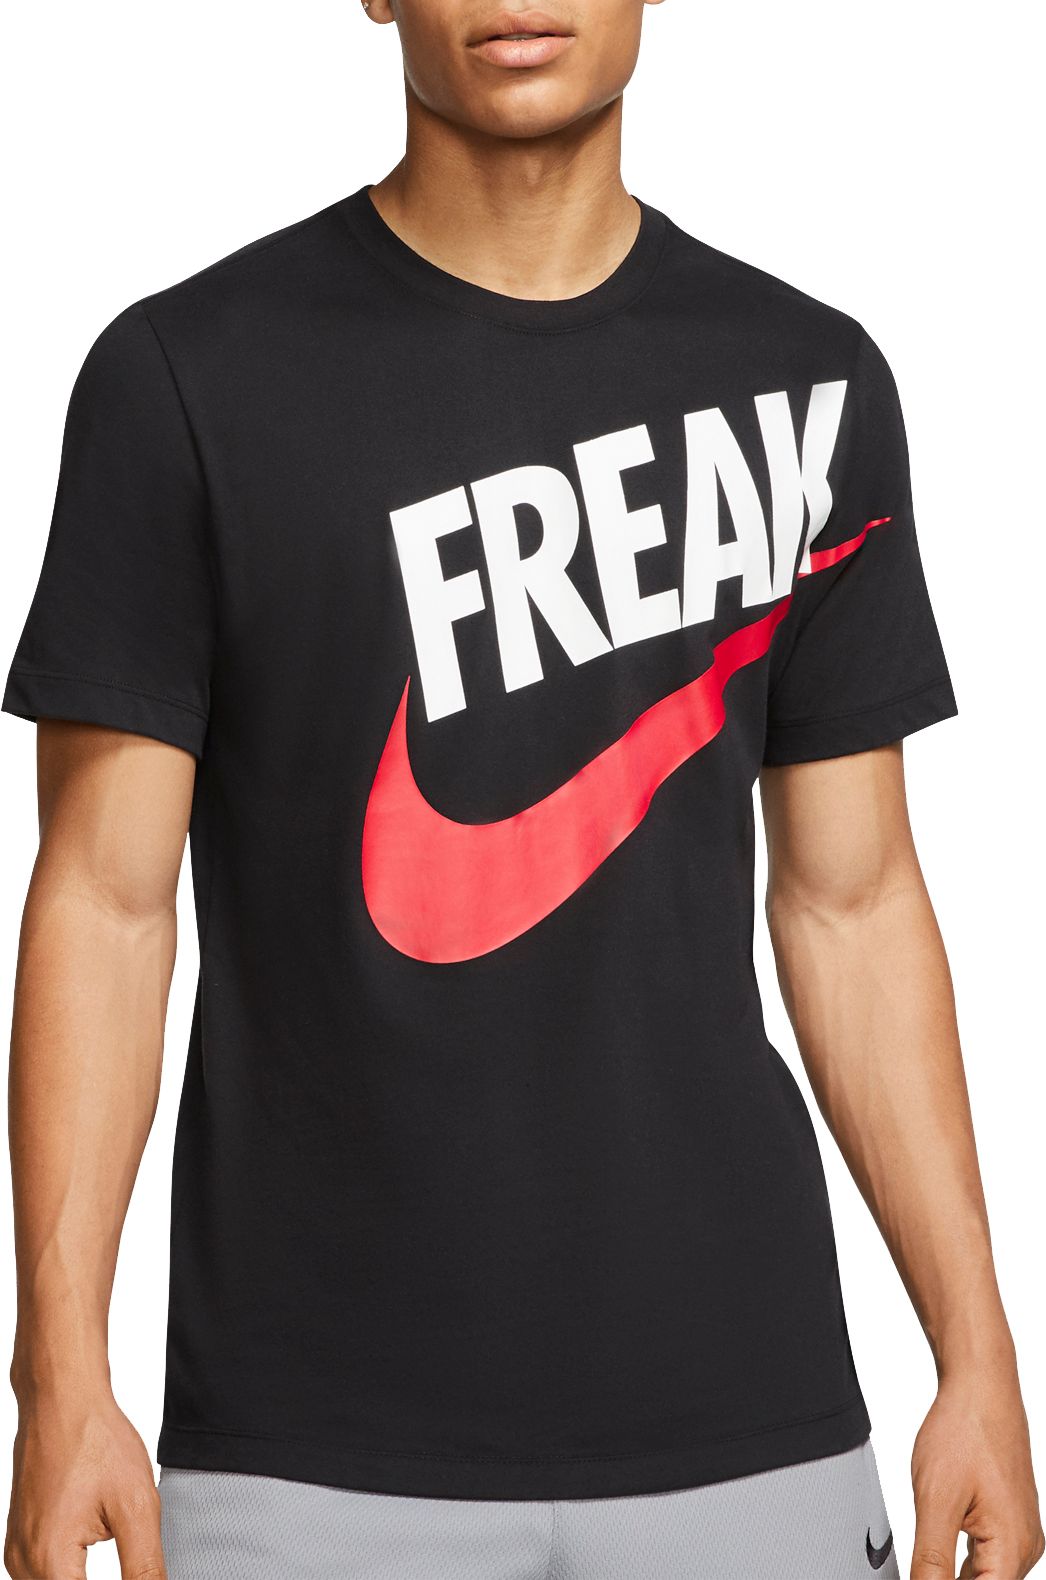 greek freak nike shirt